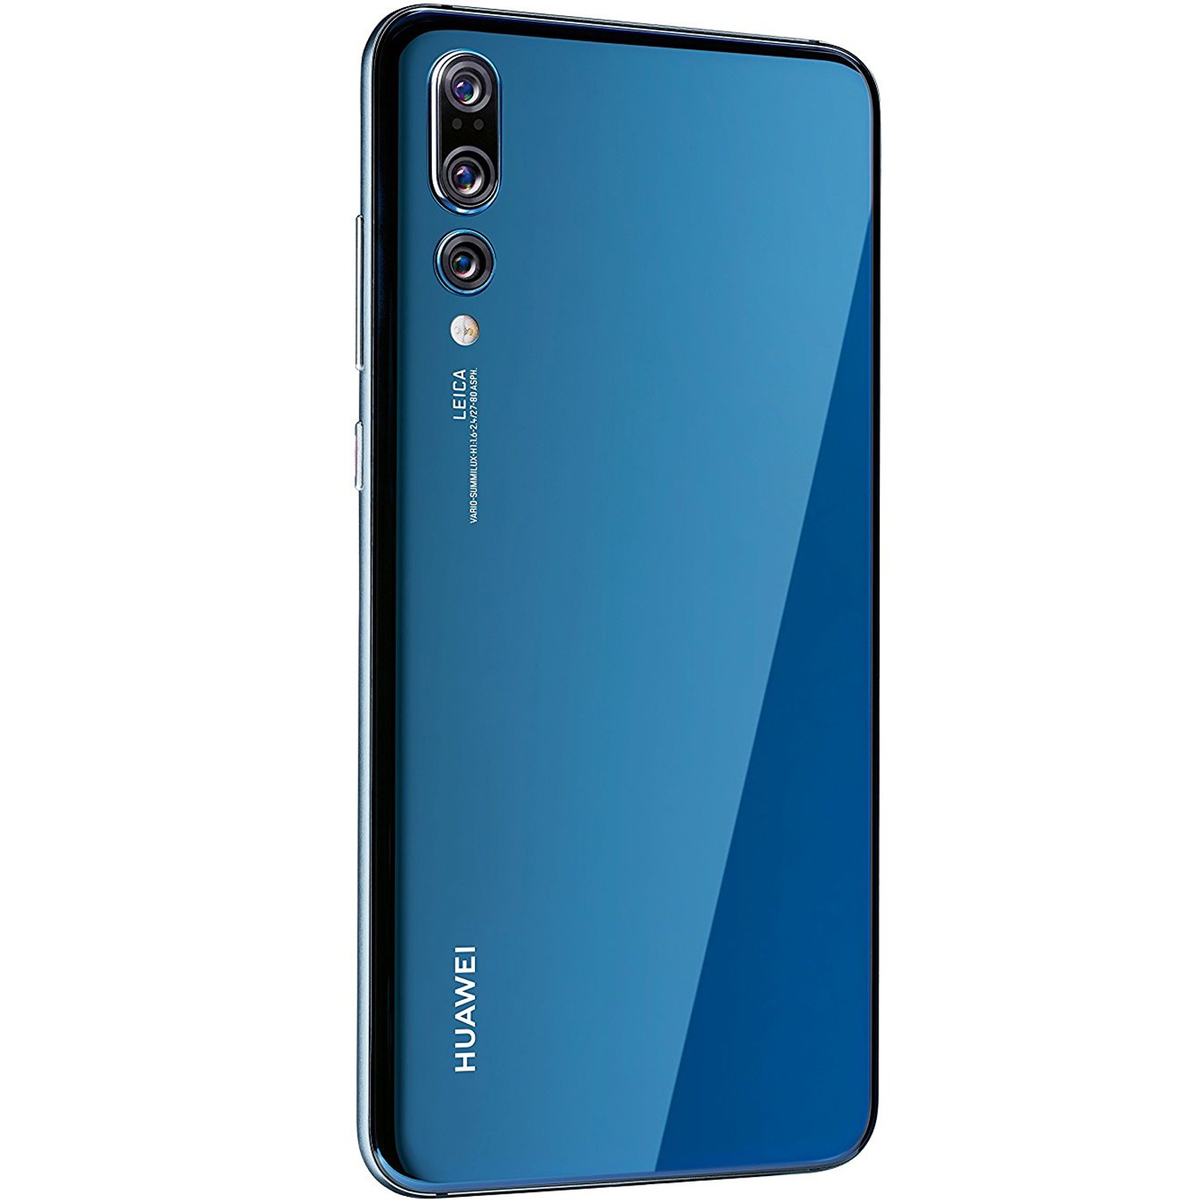 Huawei p20 4. Huawei p20 Pro Полночный синий. Huawei p20 Pro Midnight Blue.